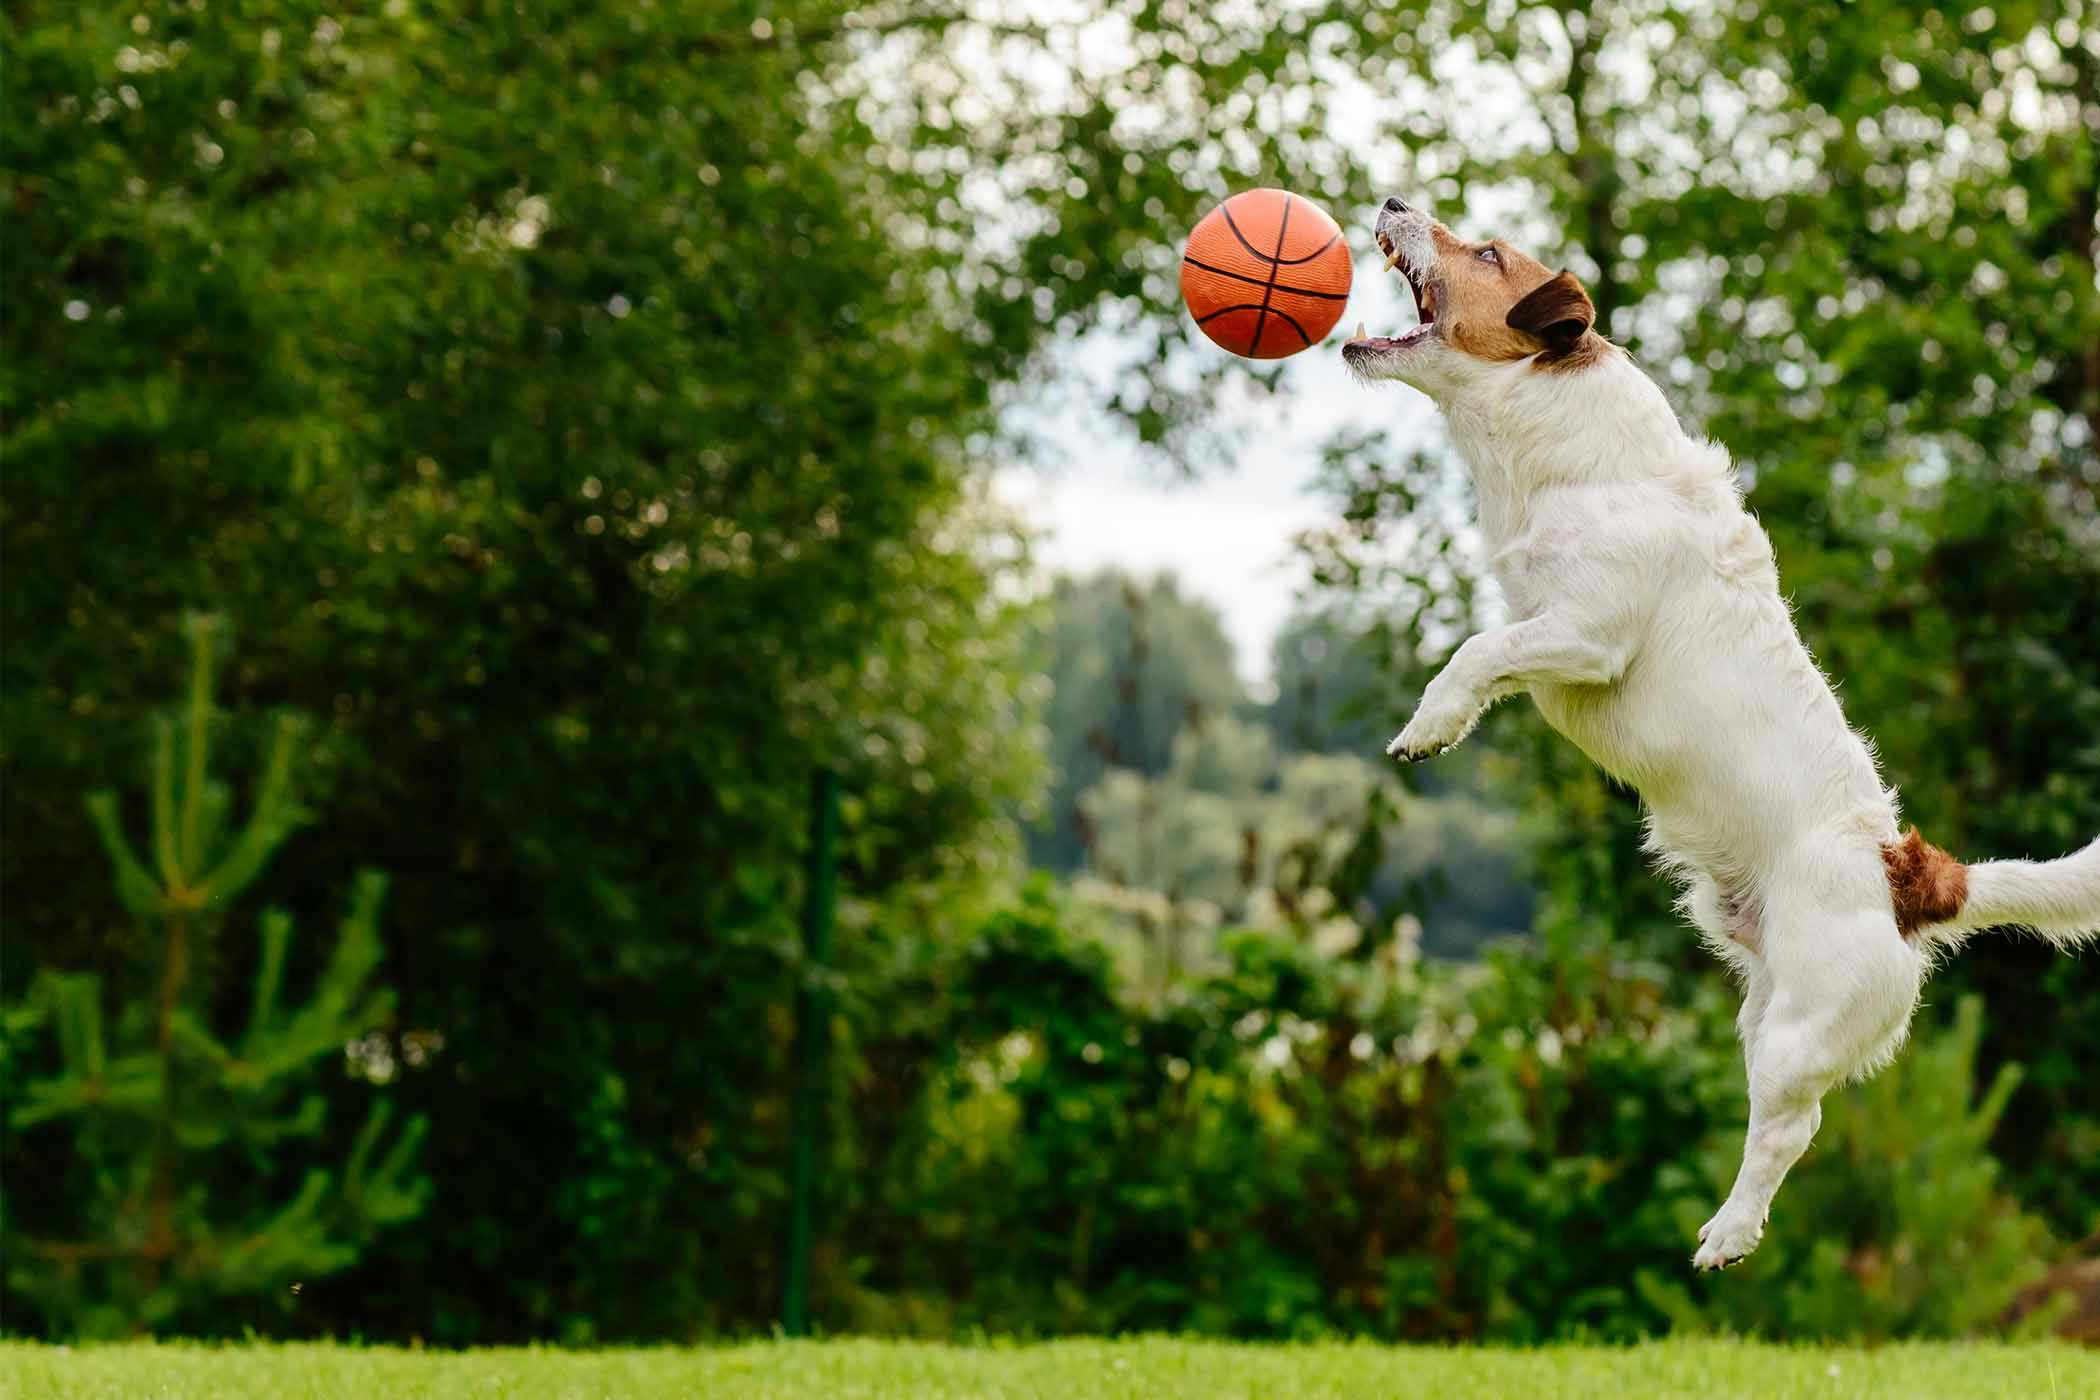 How Do You Teach A Dog To Catch A Ball